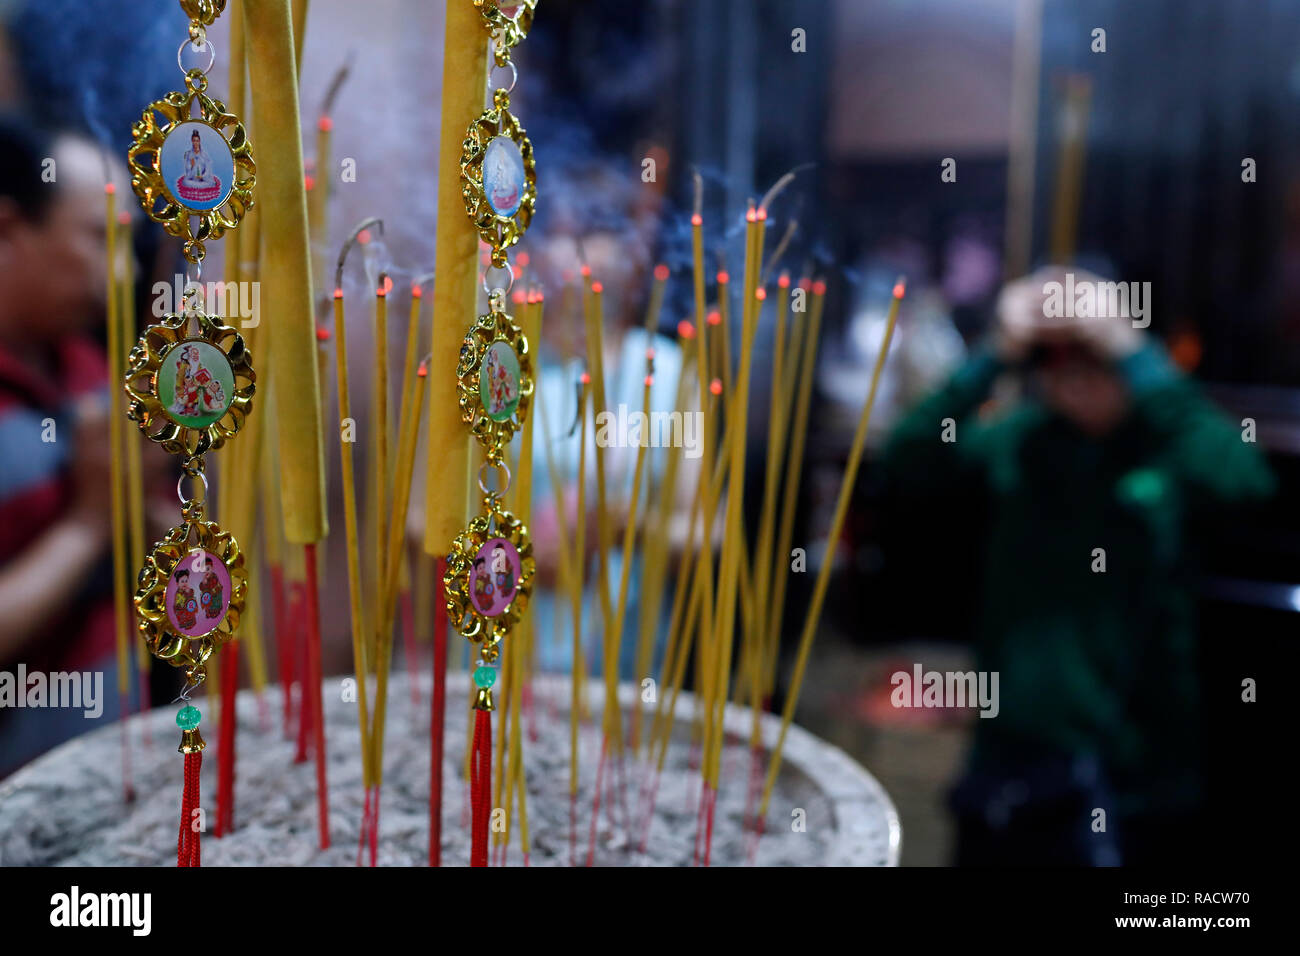 Close-up of incense sticks burning, Thien Hung Buddhist temple, Ho Chi Minh City (Saigon), Vietnam, Indochina, Southeast Asia, Asia Stock Photo